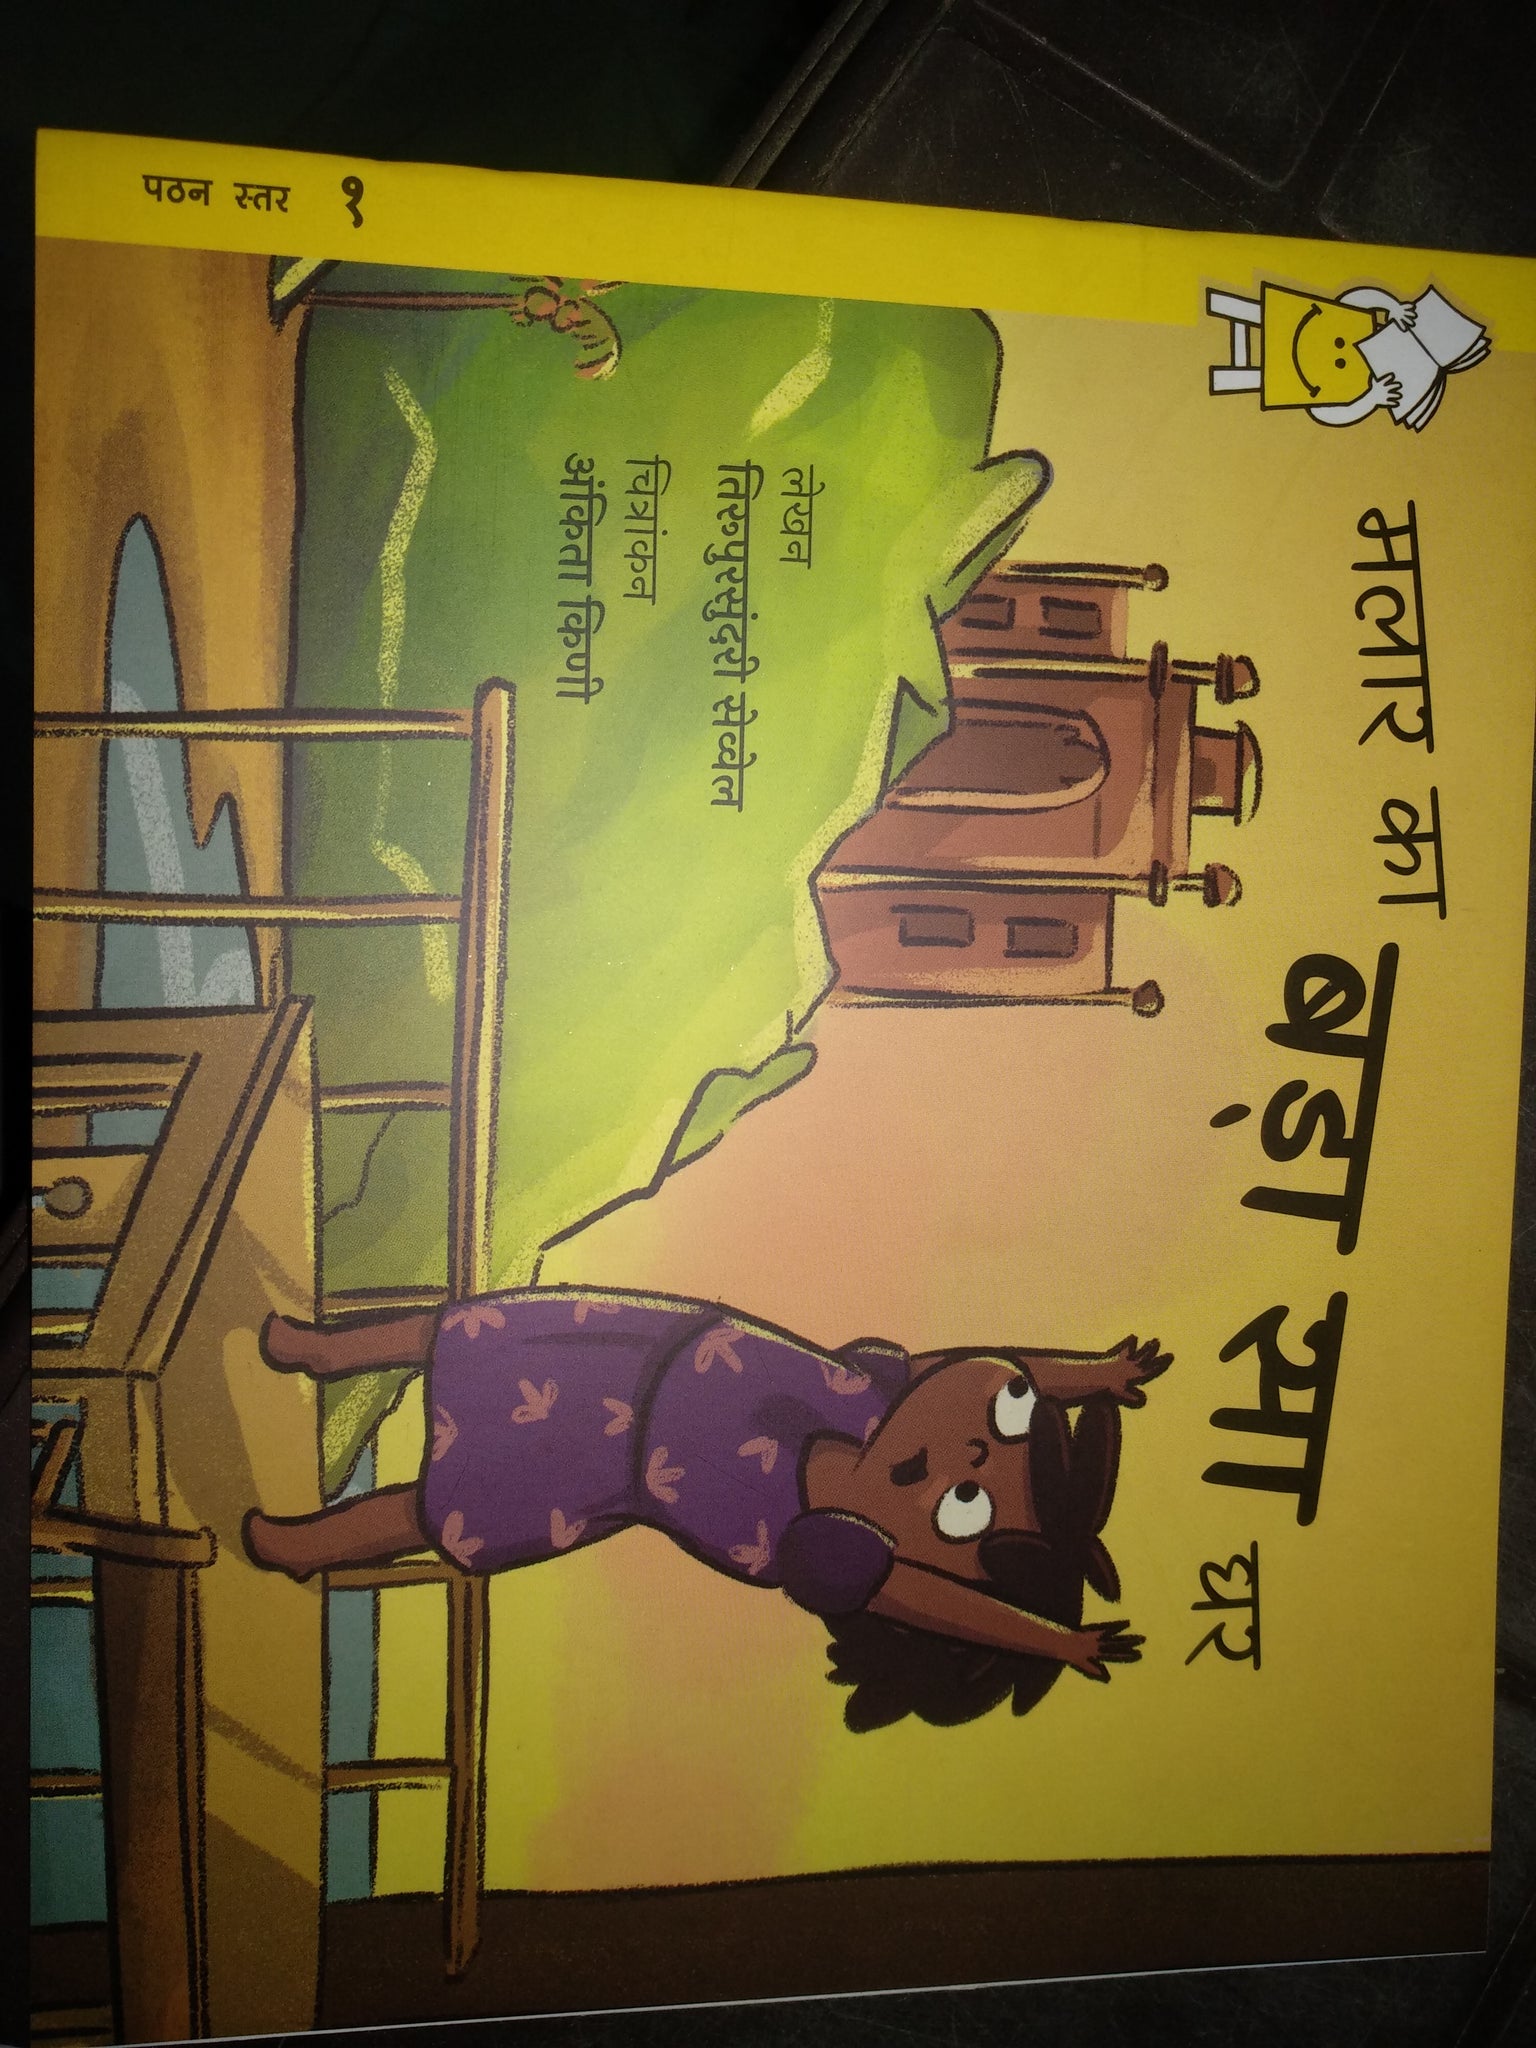 Pratham Books Lev 1 : Malaar ka bada sa Ghar-Hindi - Kool Skool The Bookstore